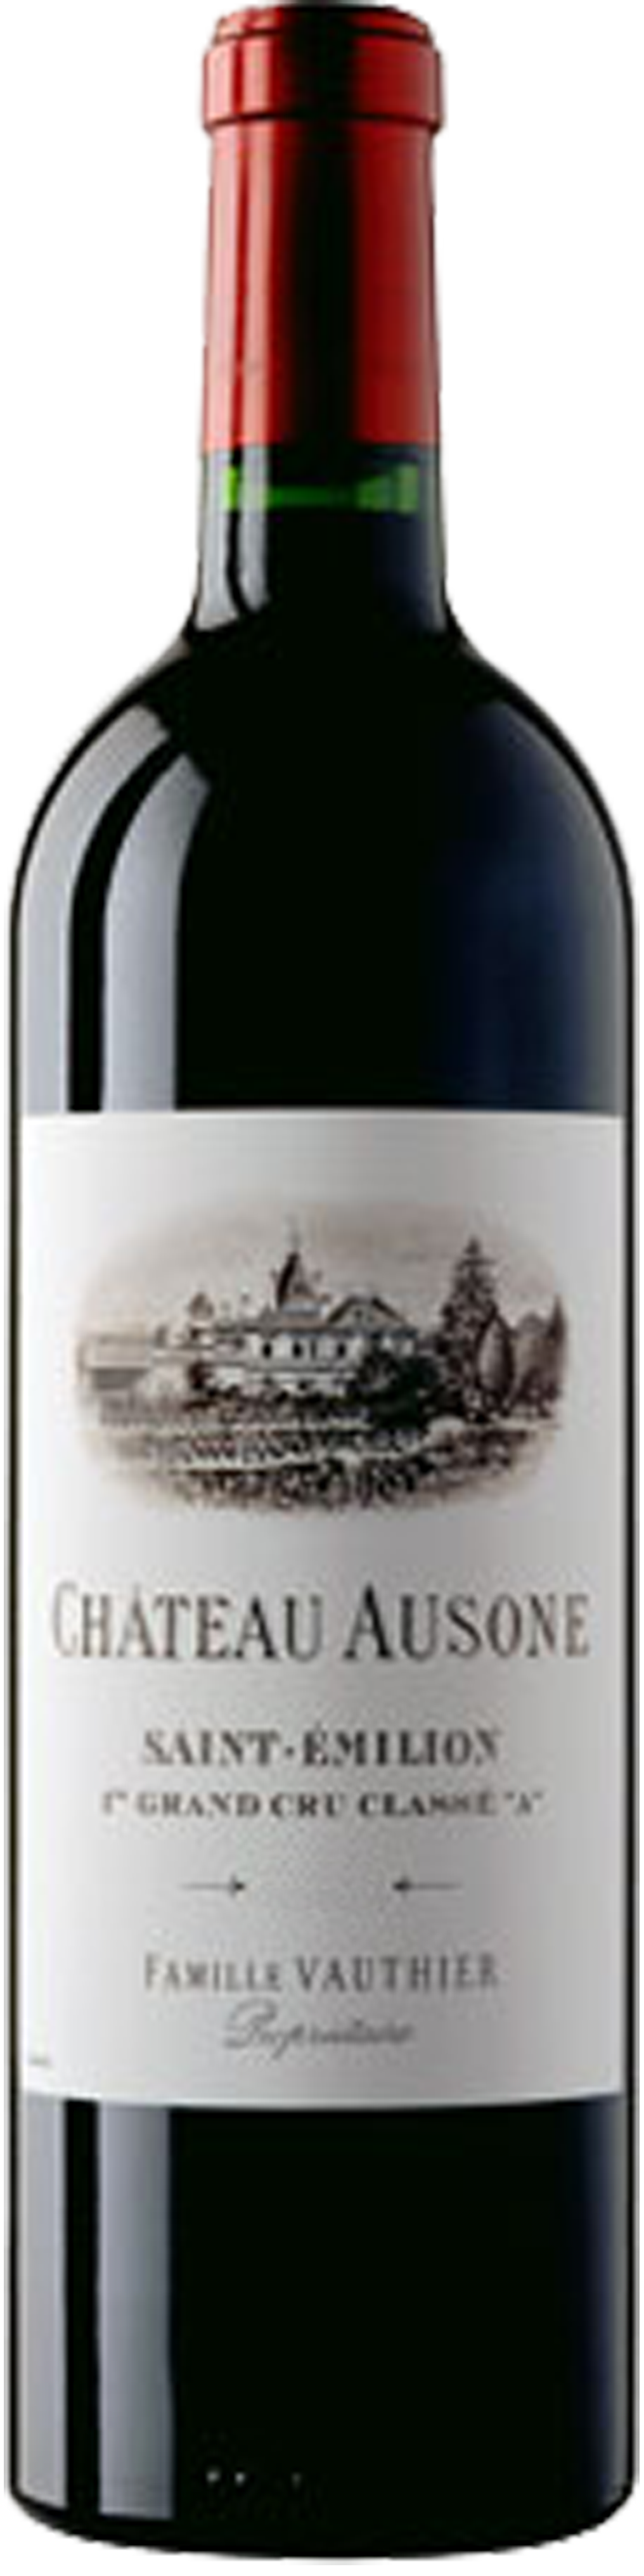 Bottle shot of 2007 Château Ausone, 1er Grand Cru Classé St Emilion